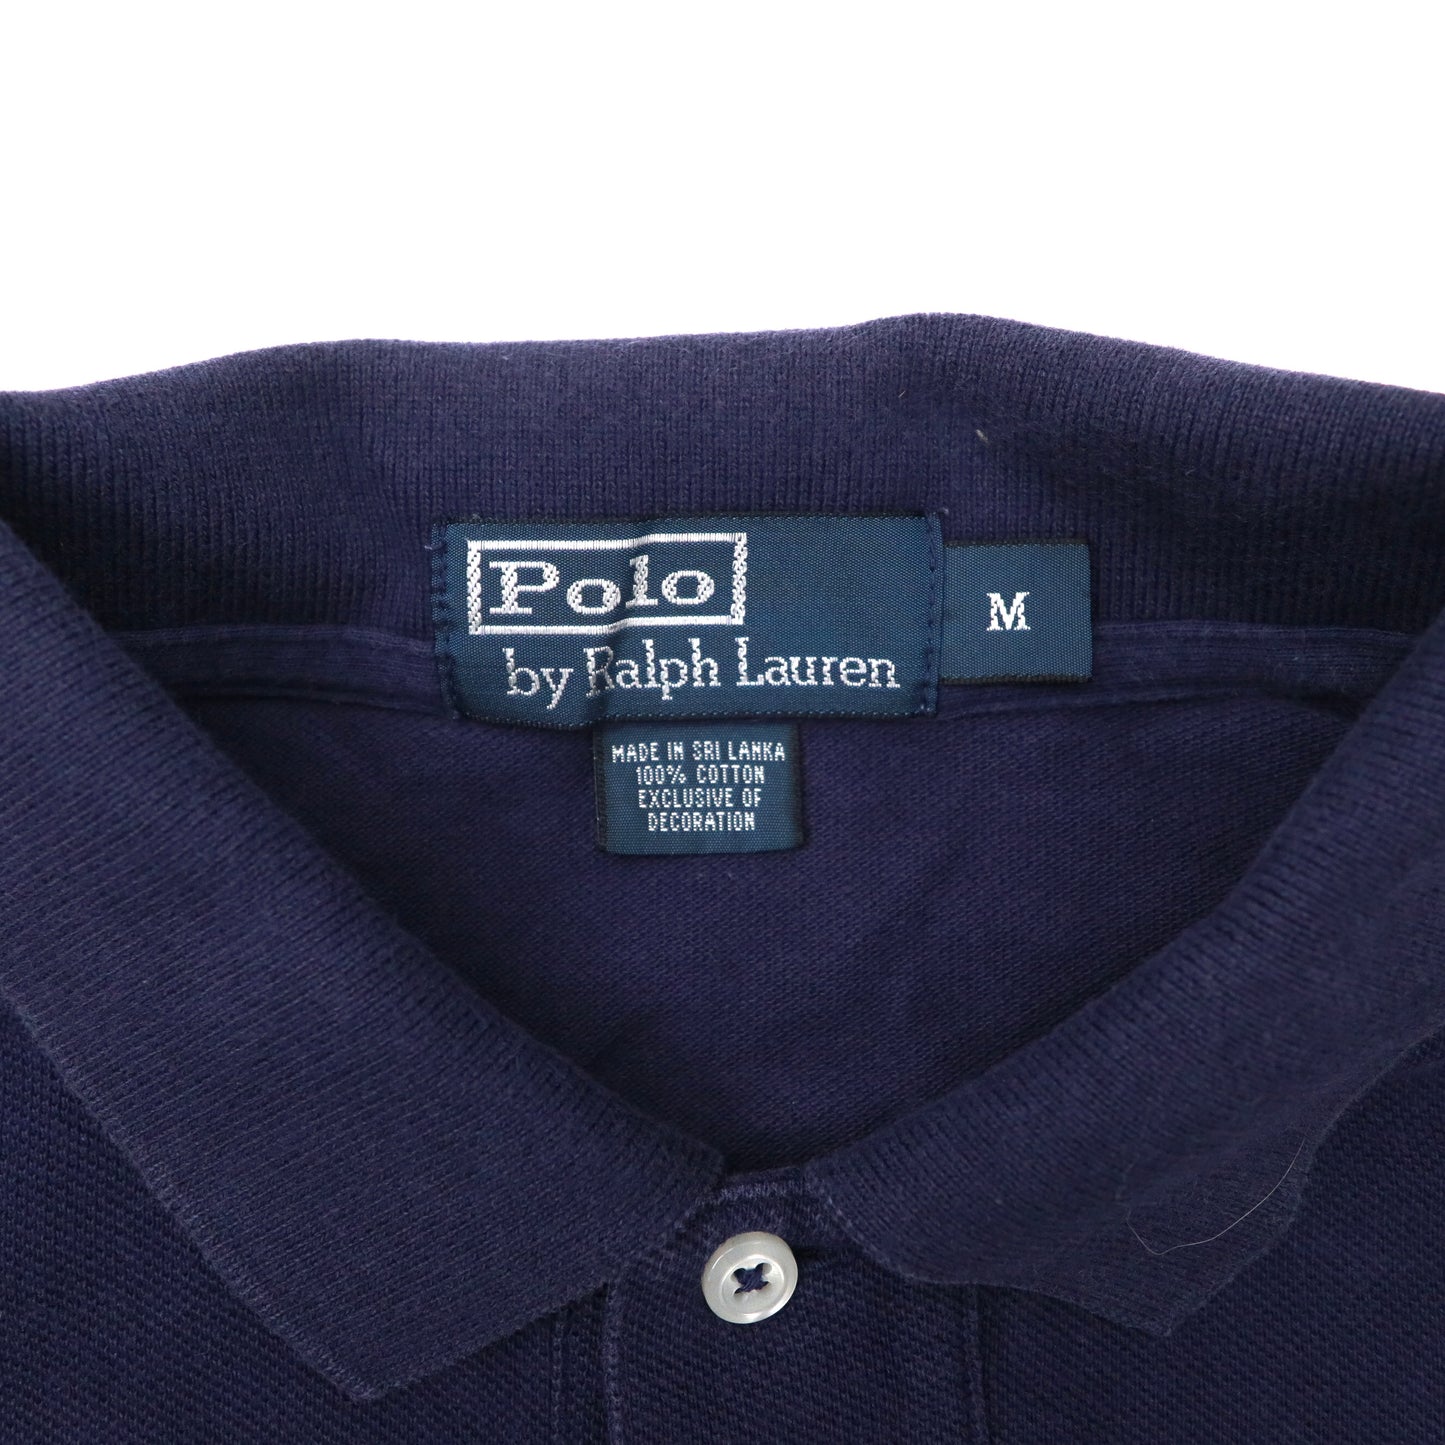 Polo by Ralph Lauren ポロシャツ M ネイビー コットン スモールポニー刺繍 スリランカ製